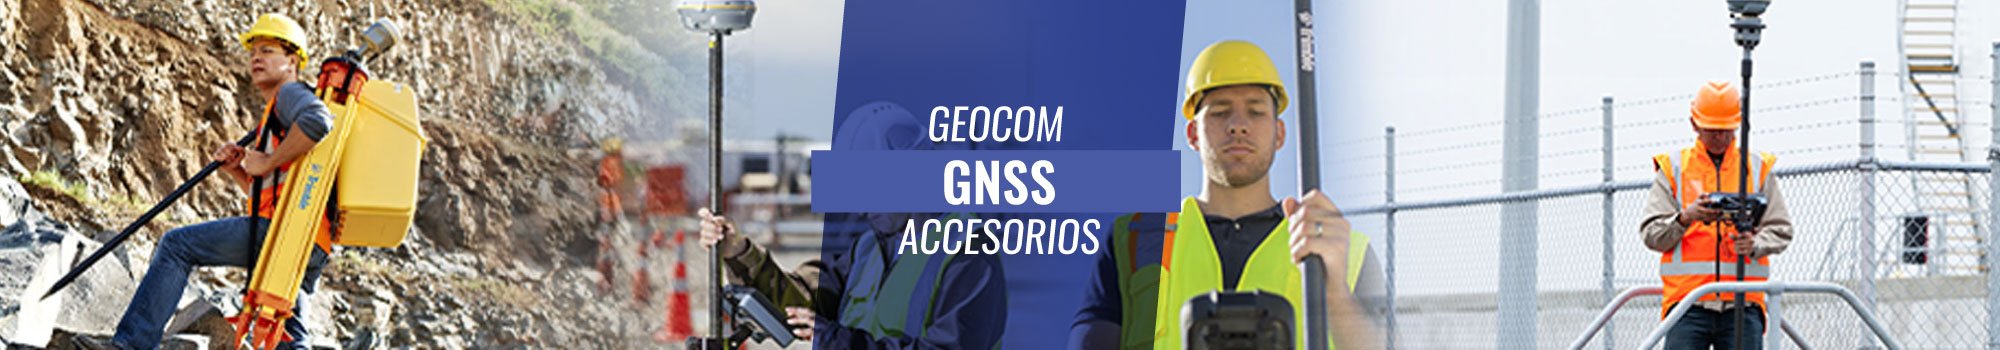 Accesorios GNSS